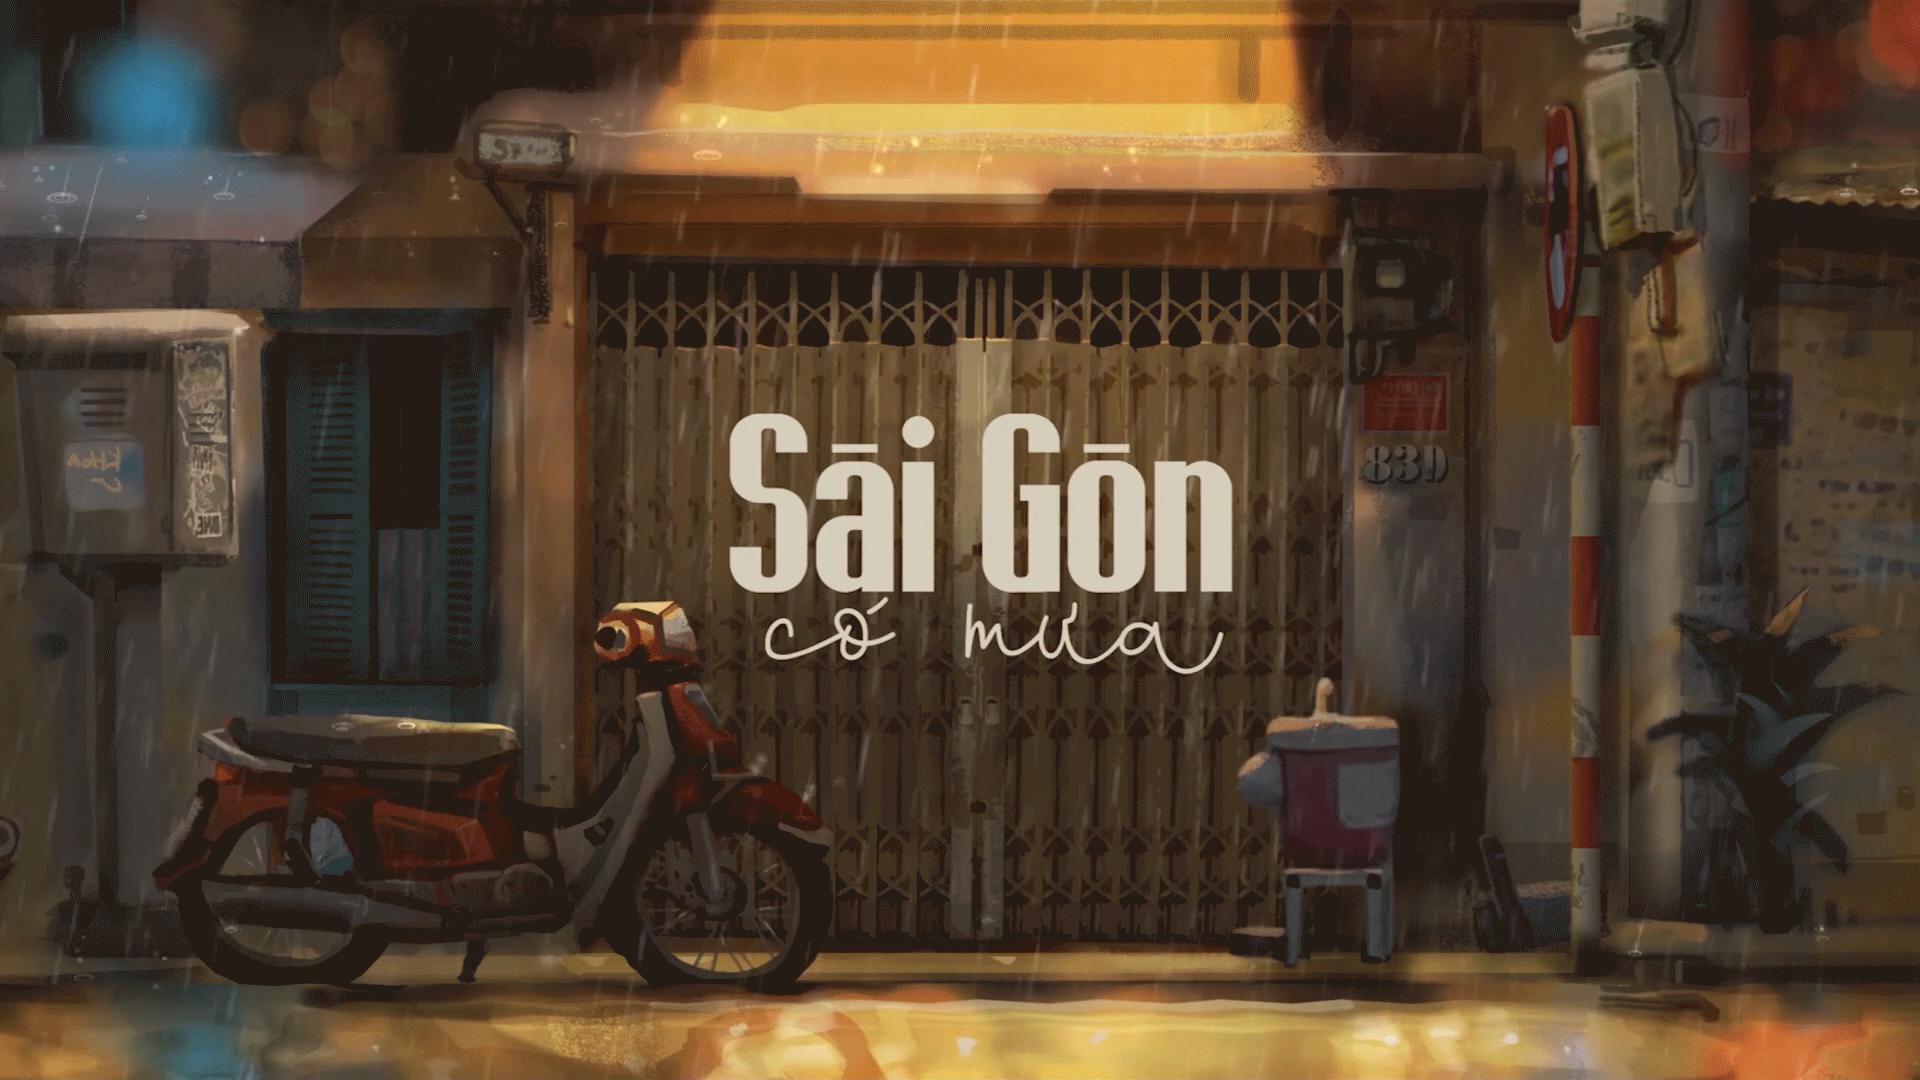 Saigon Rainy Days through Illustrations